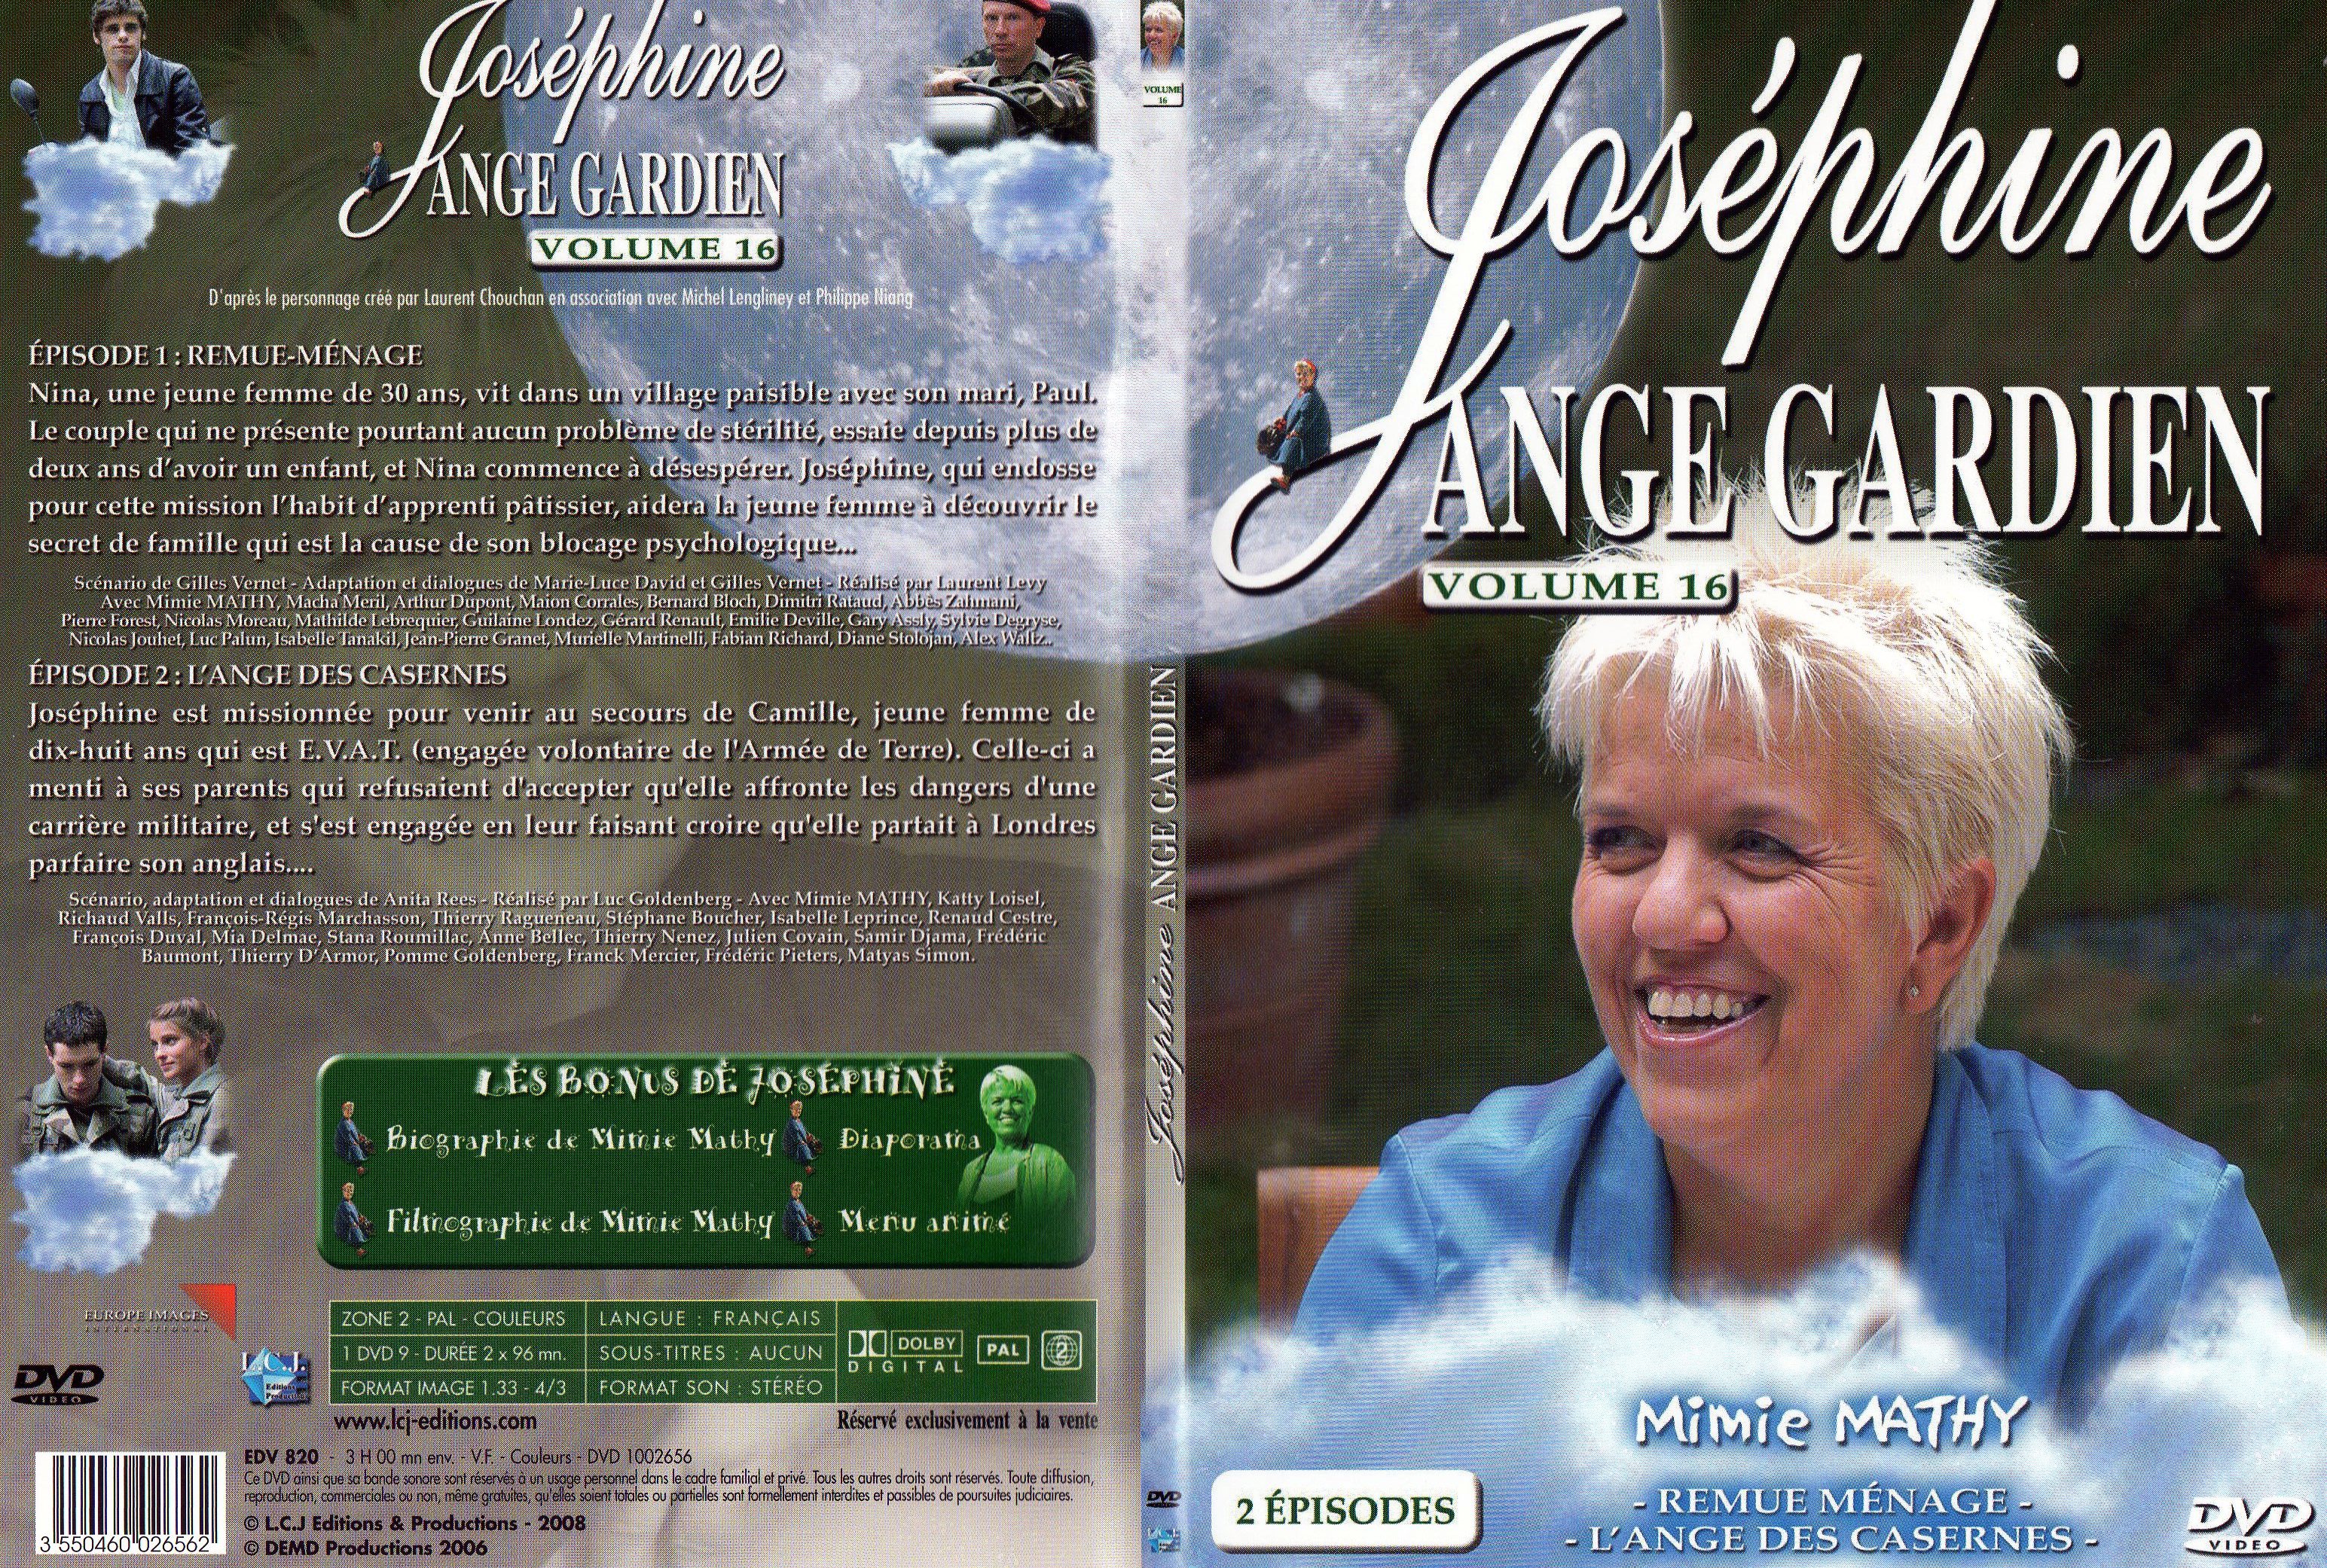 Jaquette DVD Josphine Ange Gardien saison 4 DVD 16